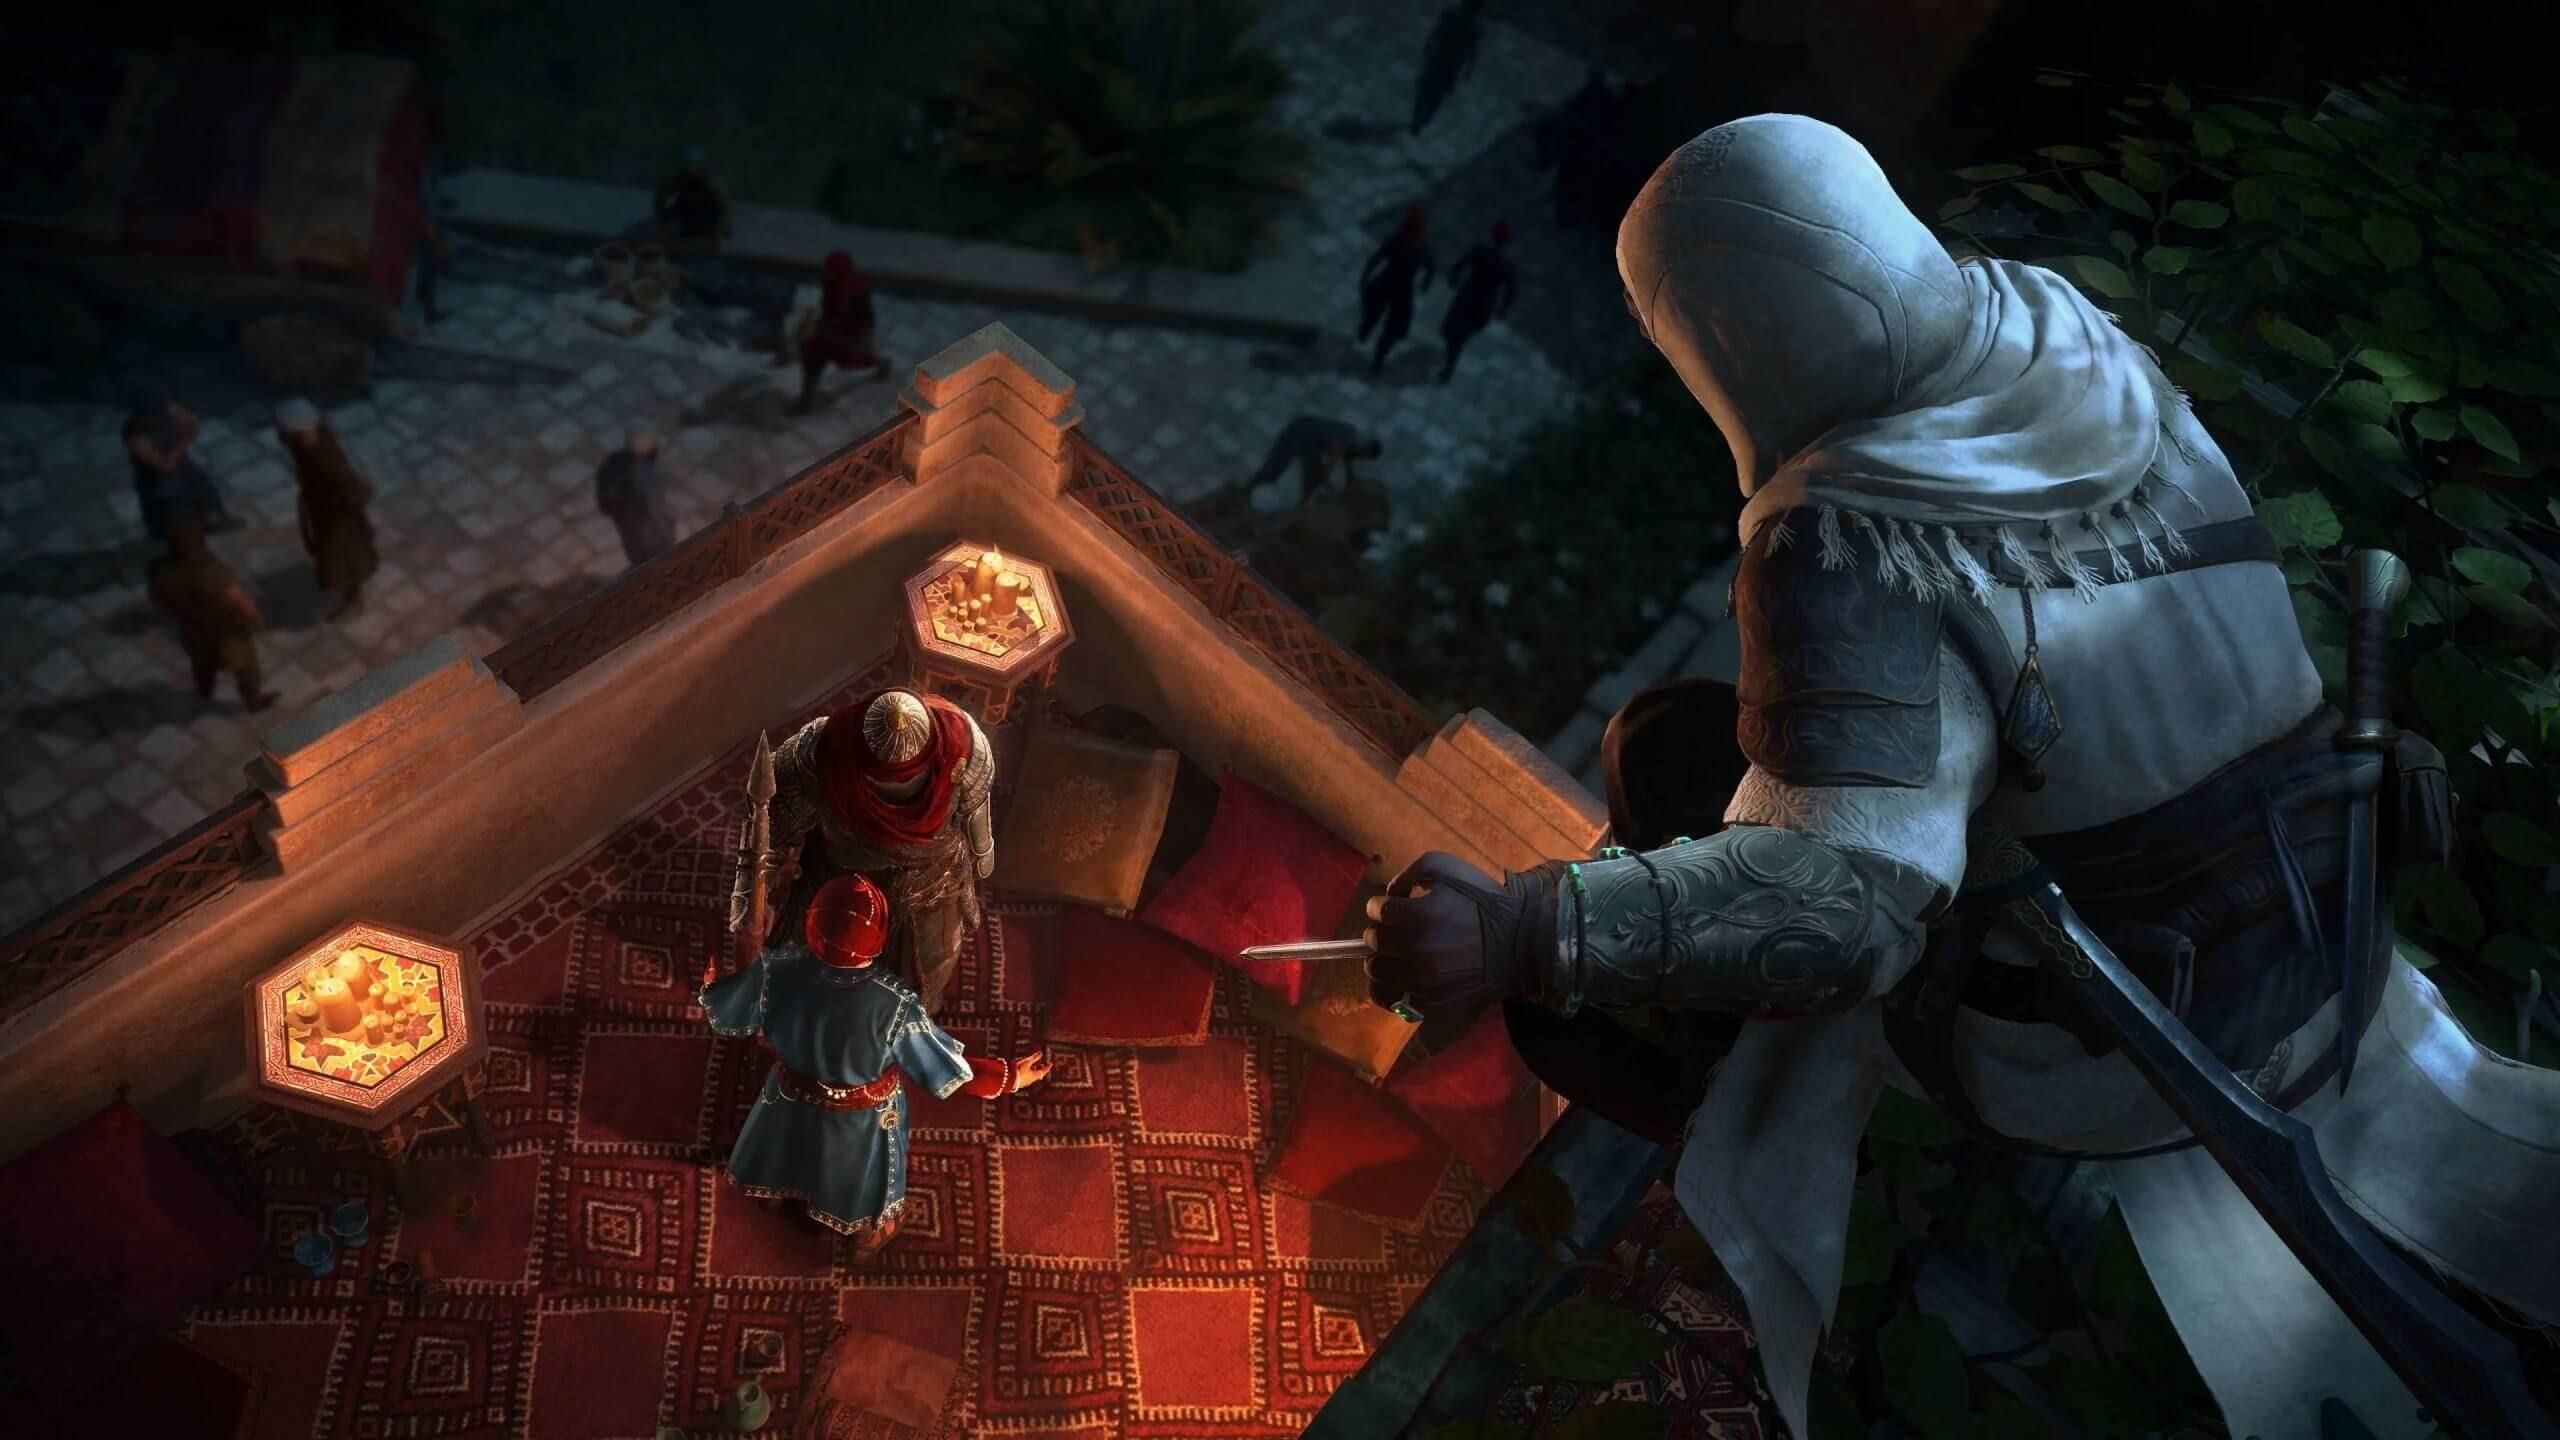 Assassin's Creed Mirage Edycja Kolekcjonerska (Gra Xbox Series X)